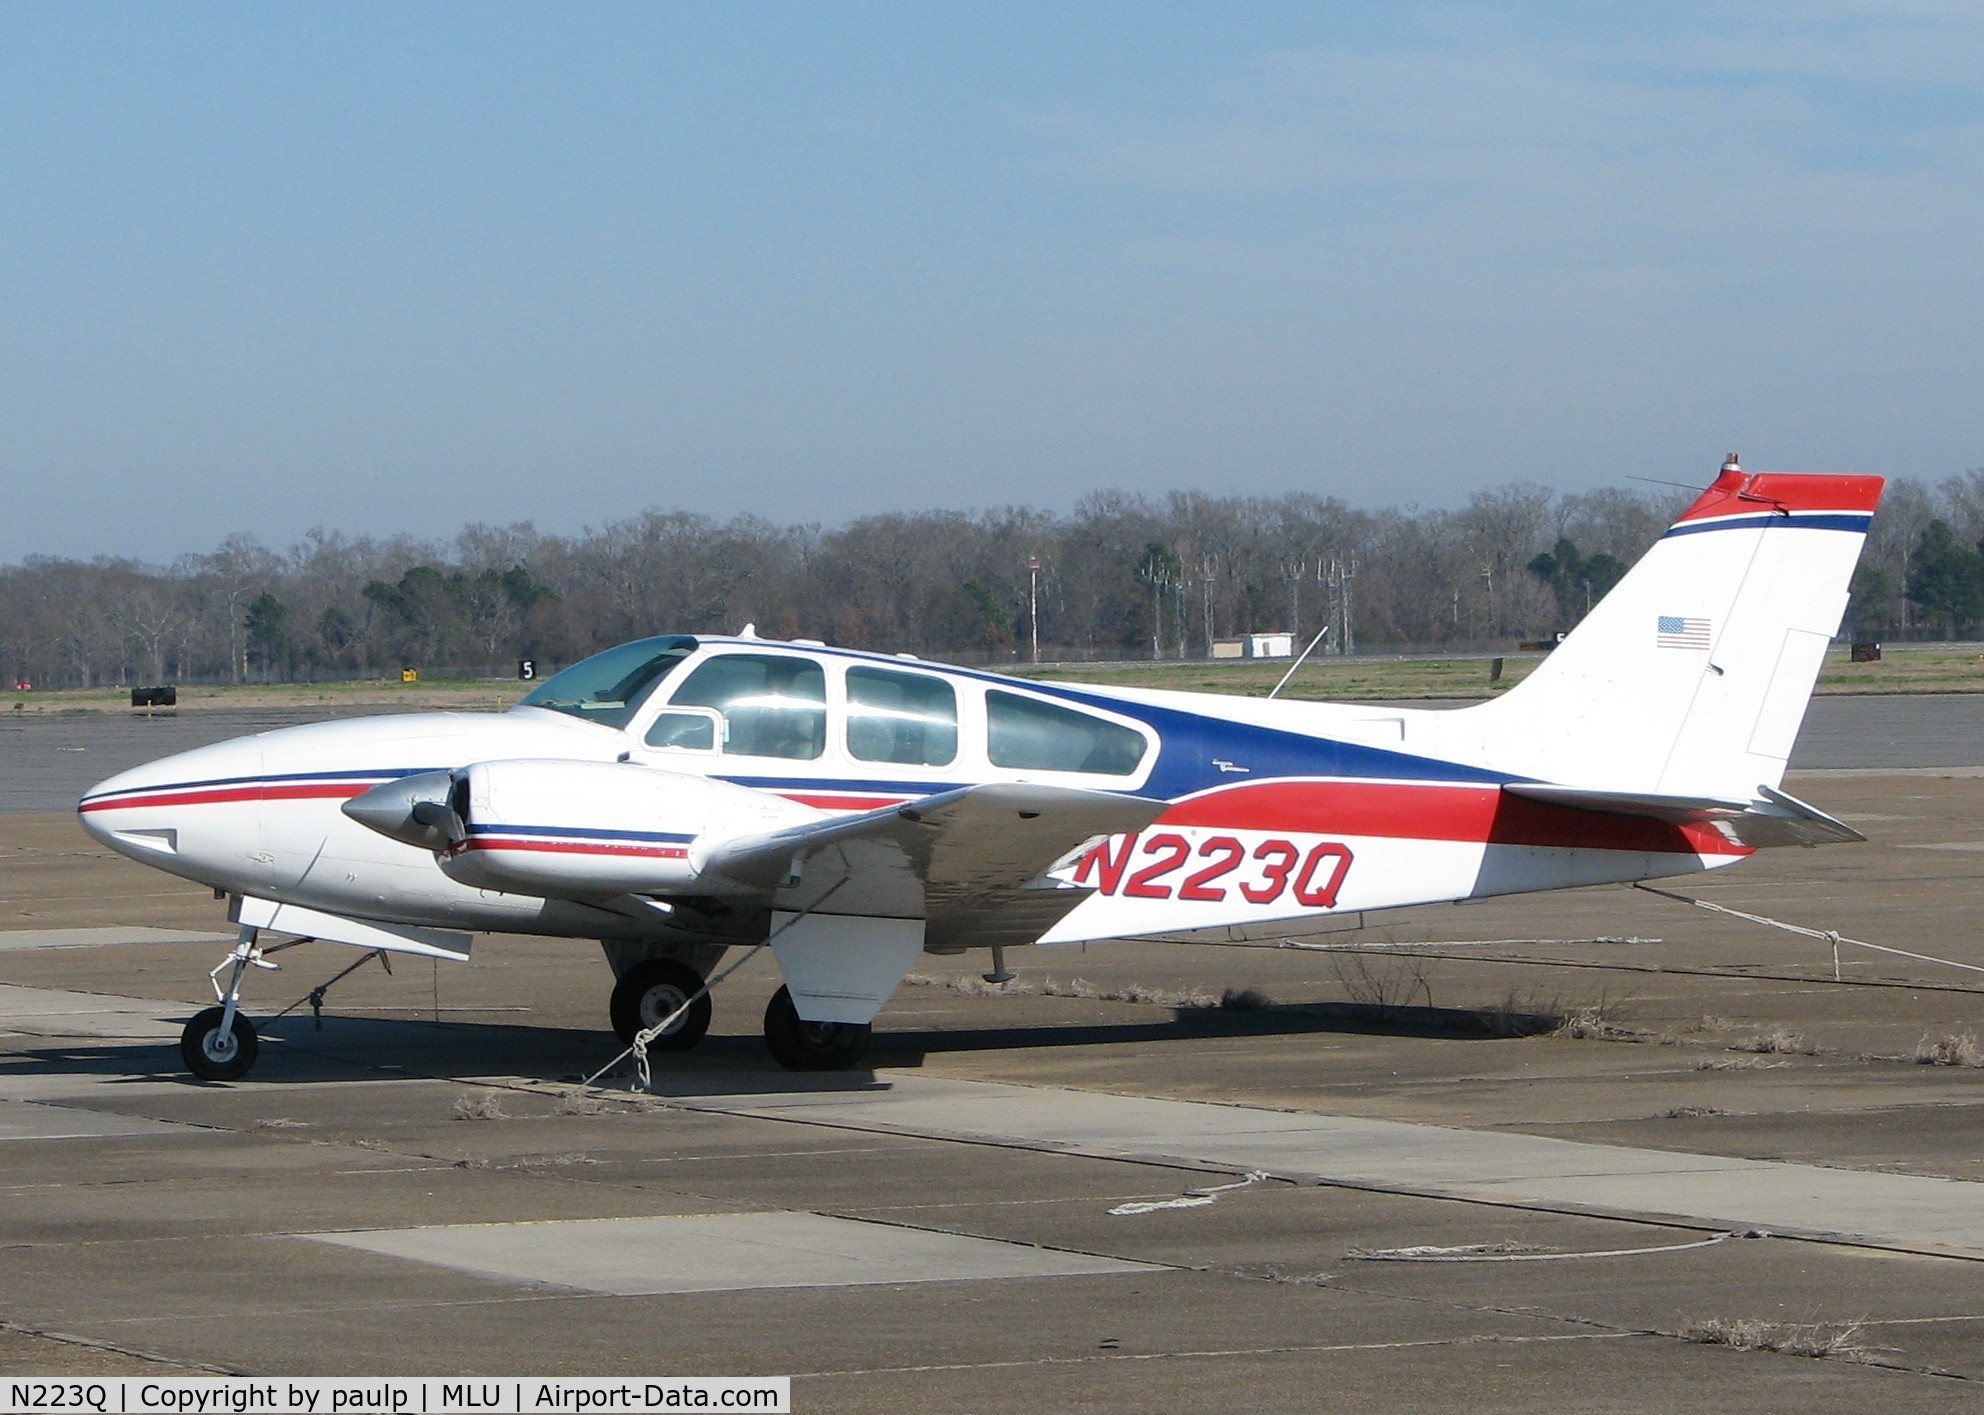 N223Q, 1966 Beech C55 Baron (95-C55) C/N TE-94, Parked at the Monroe,Louisiana airport.